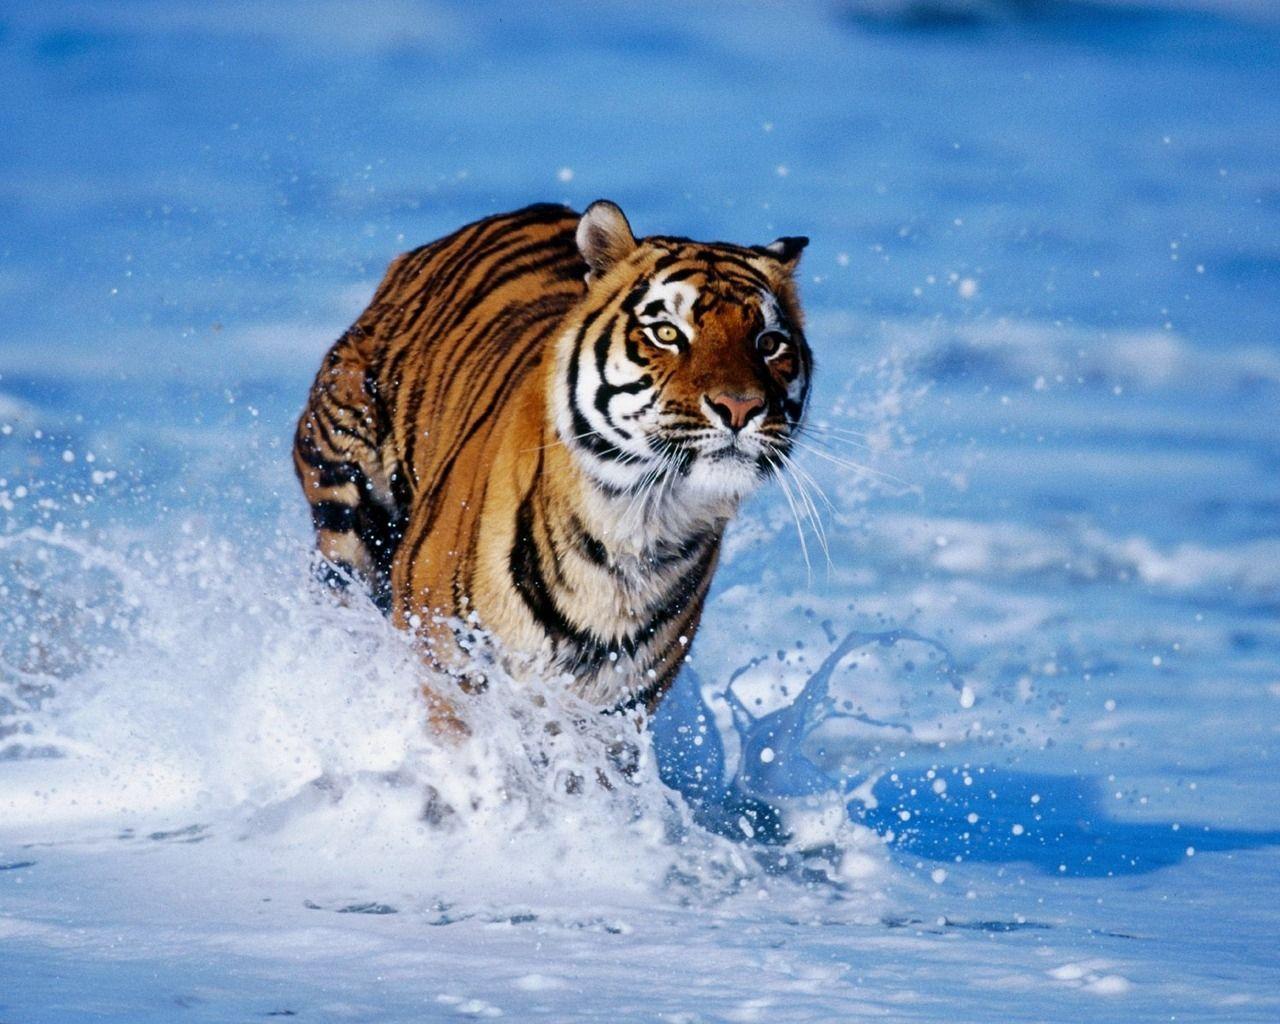 Tiger in the water desktop wallpapers